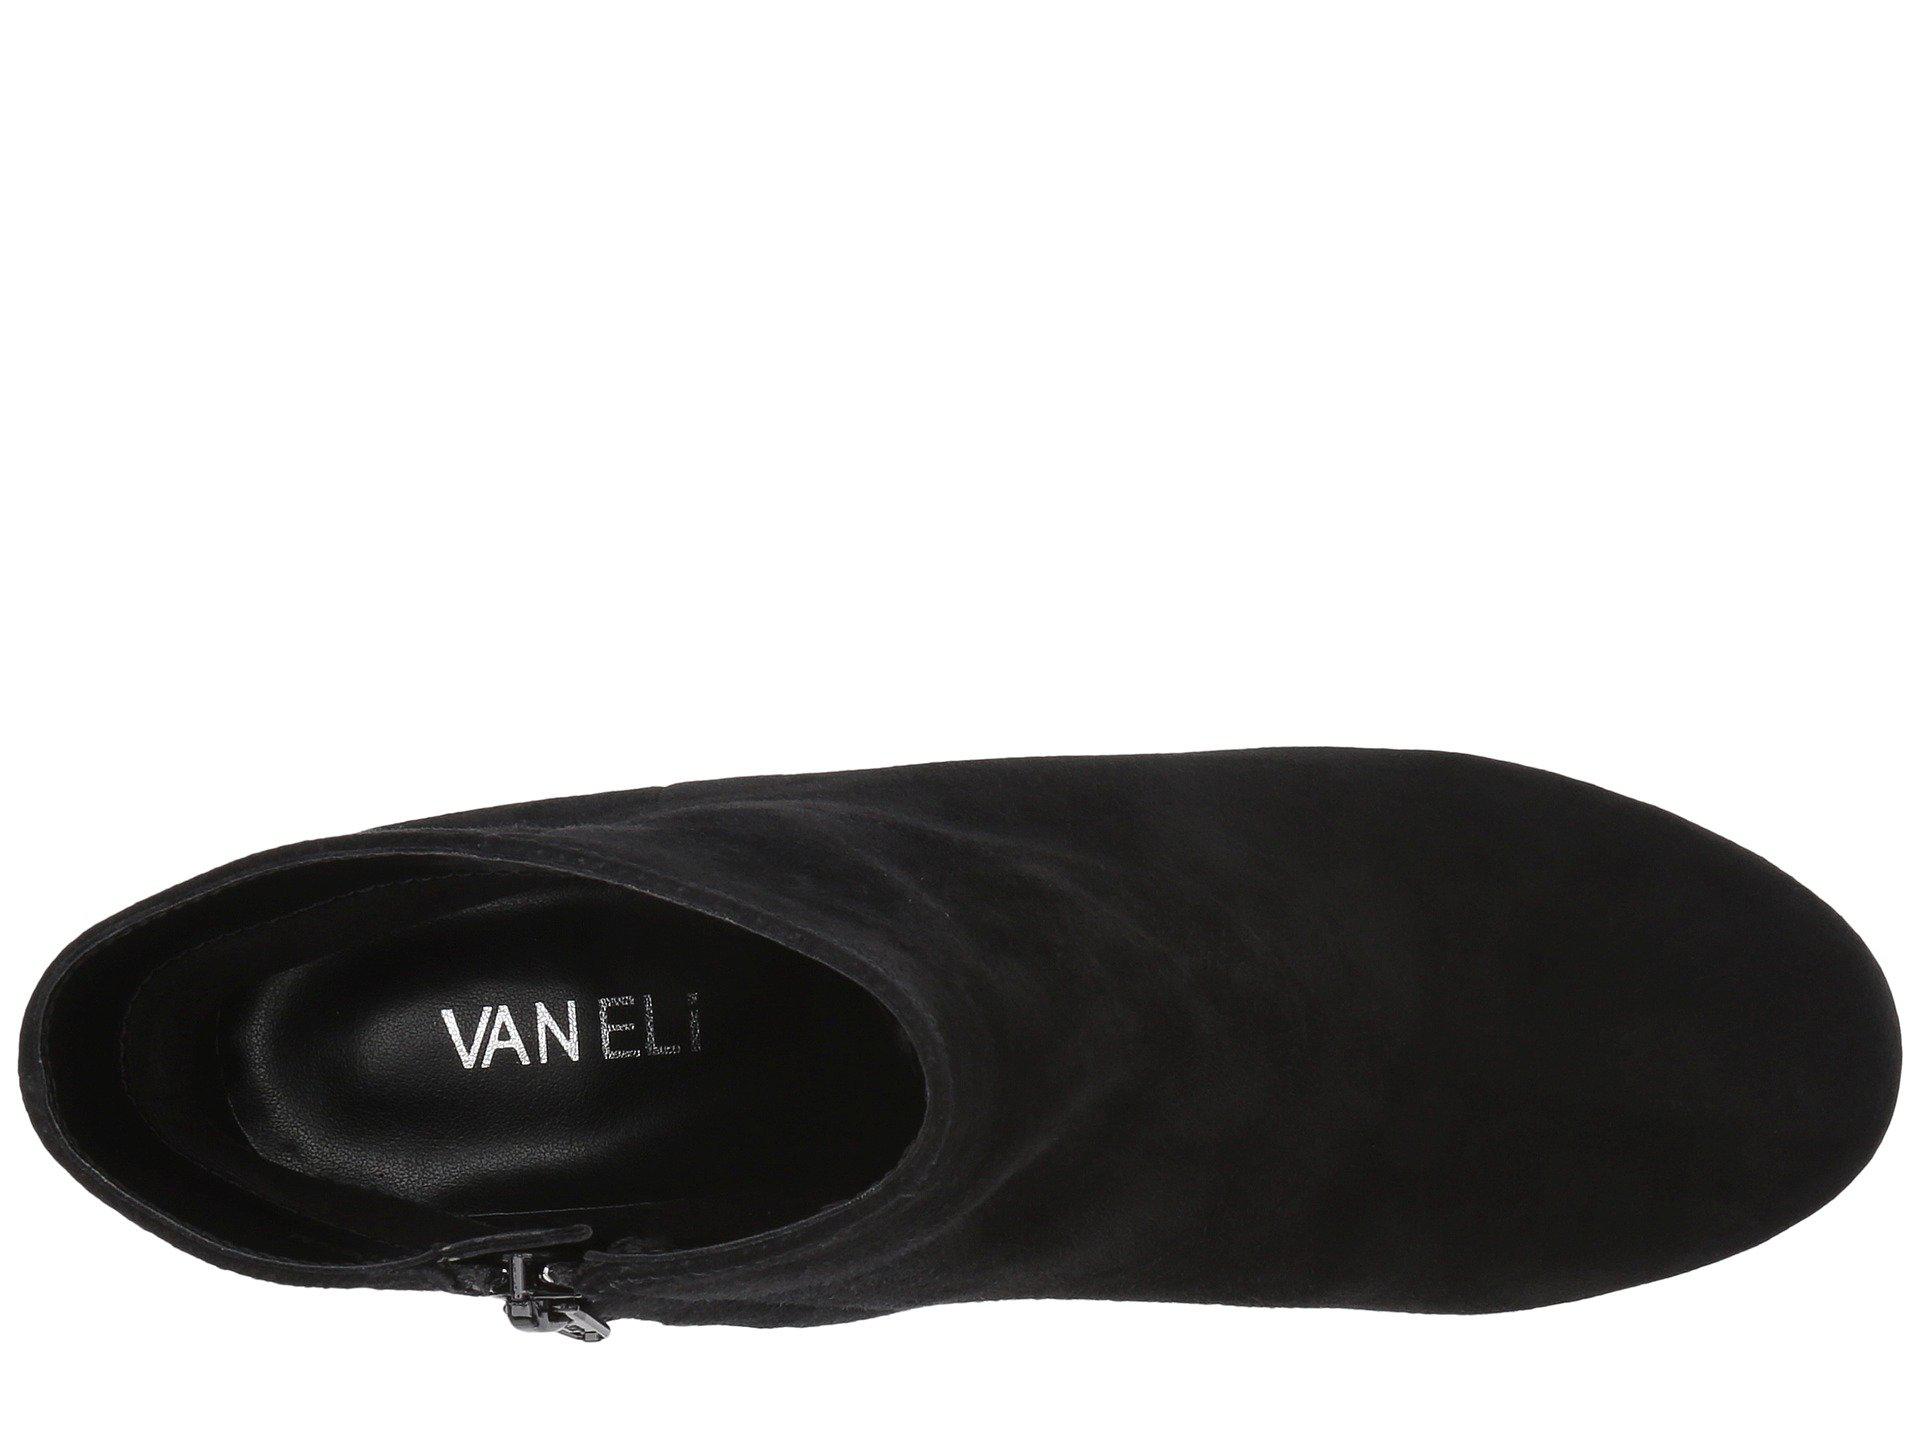 Vaneli Leather Zandra in Black Suede 